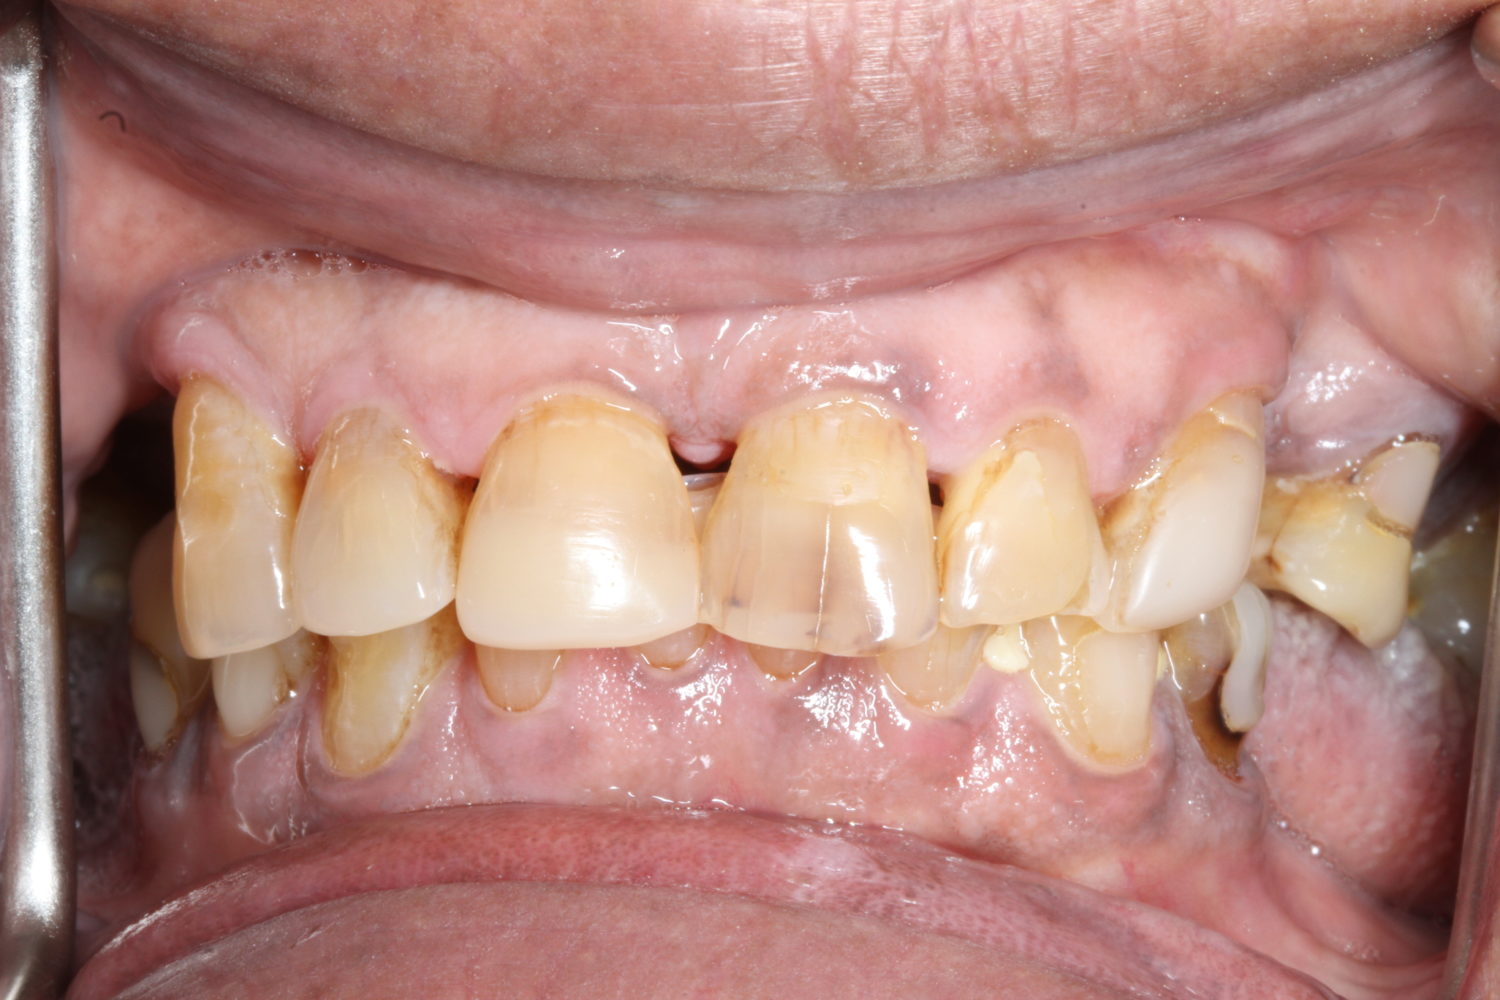 Before Major Restorative Dental Treatment